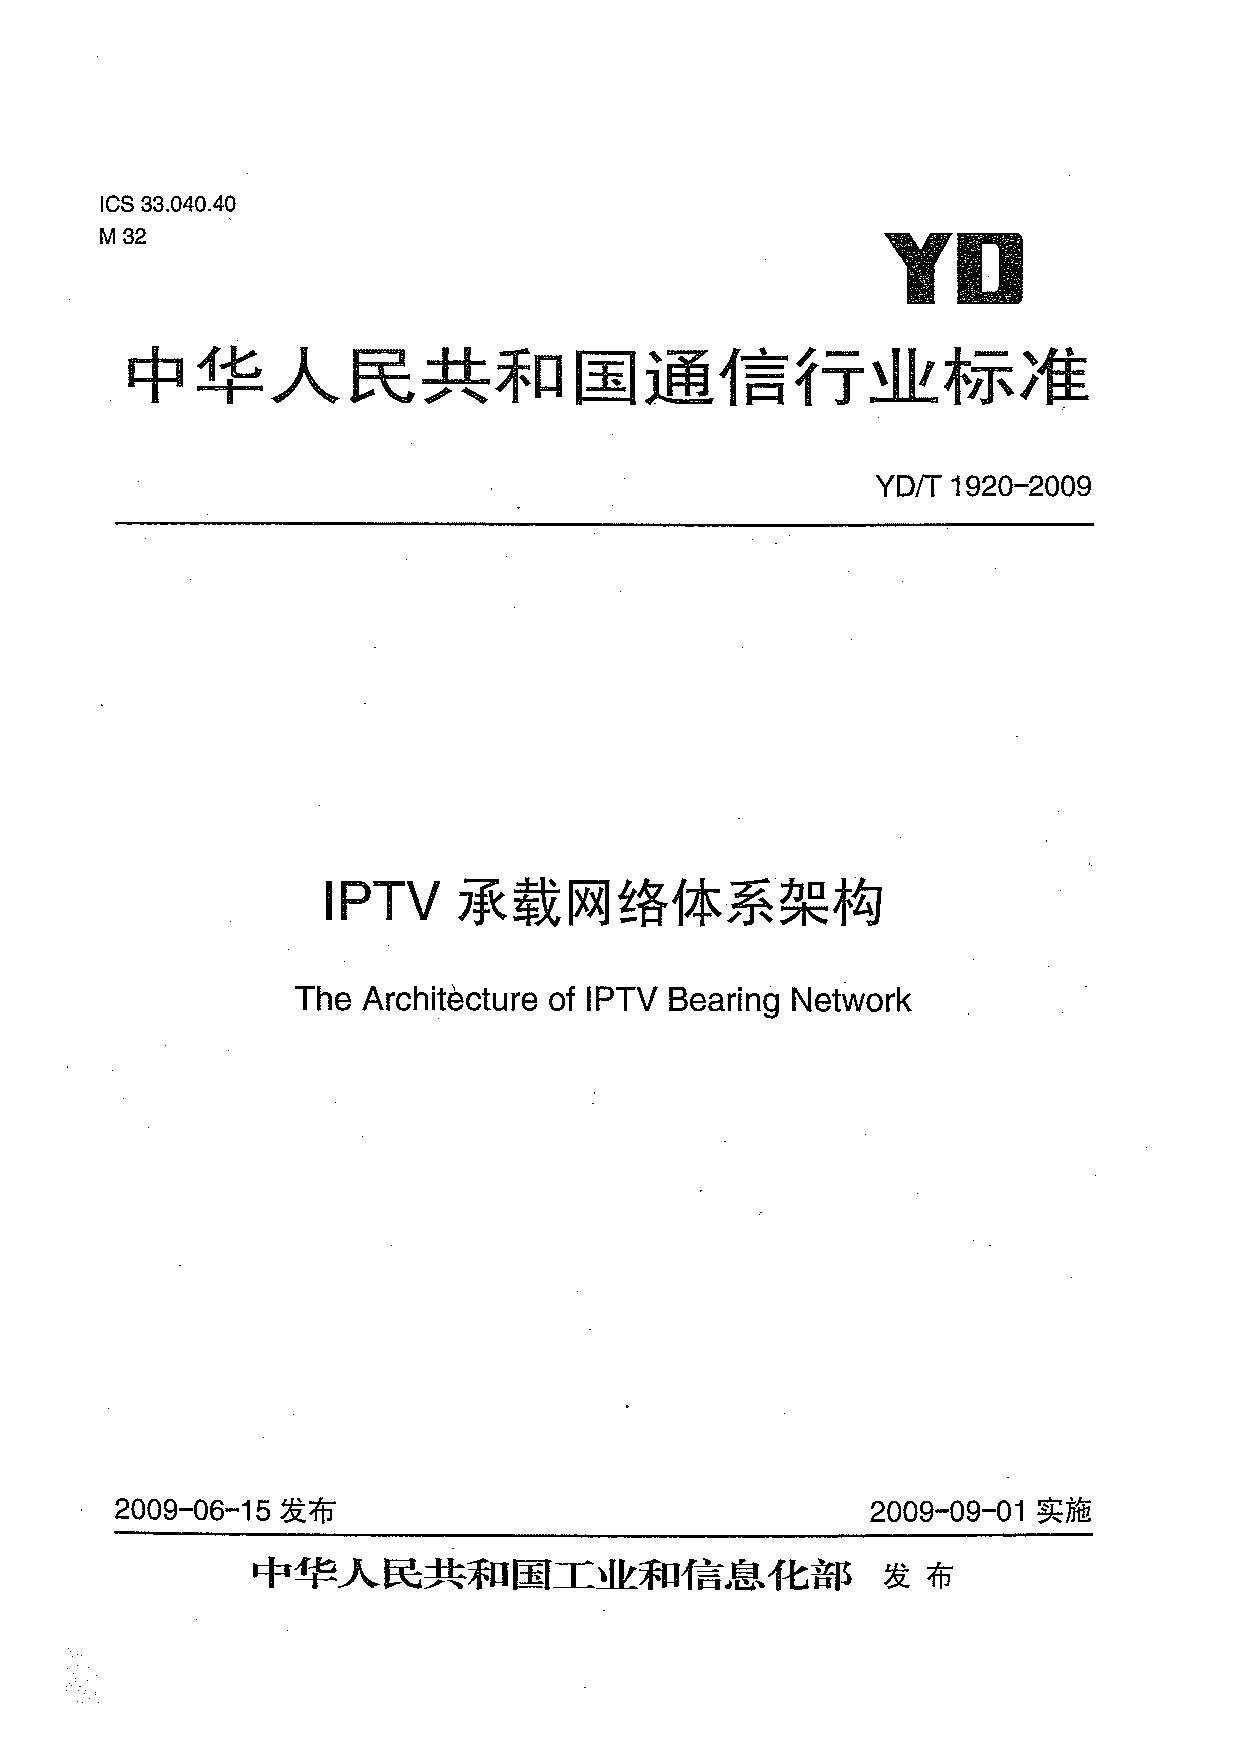 YD/T 1920-2009封面图